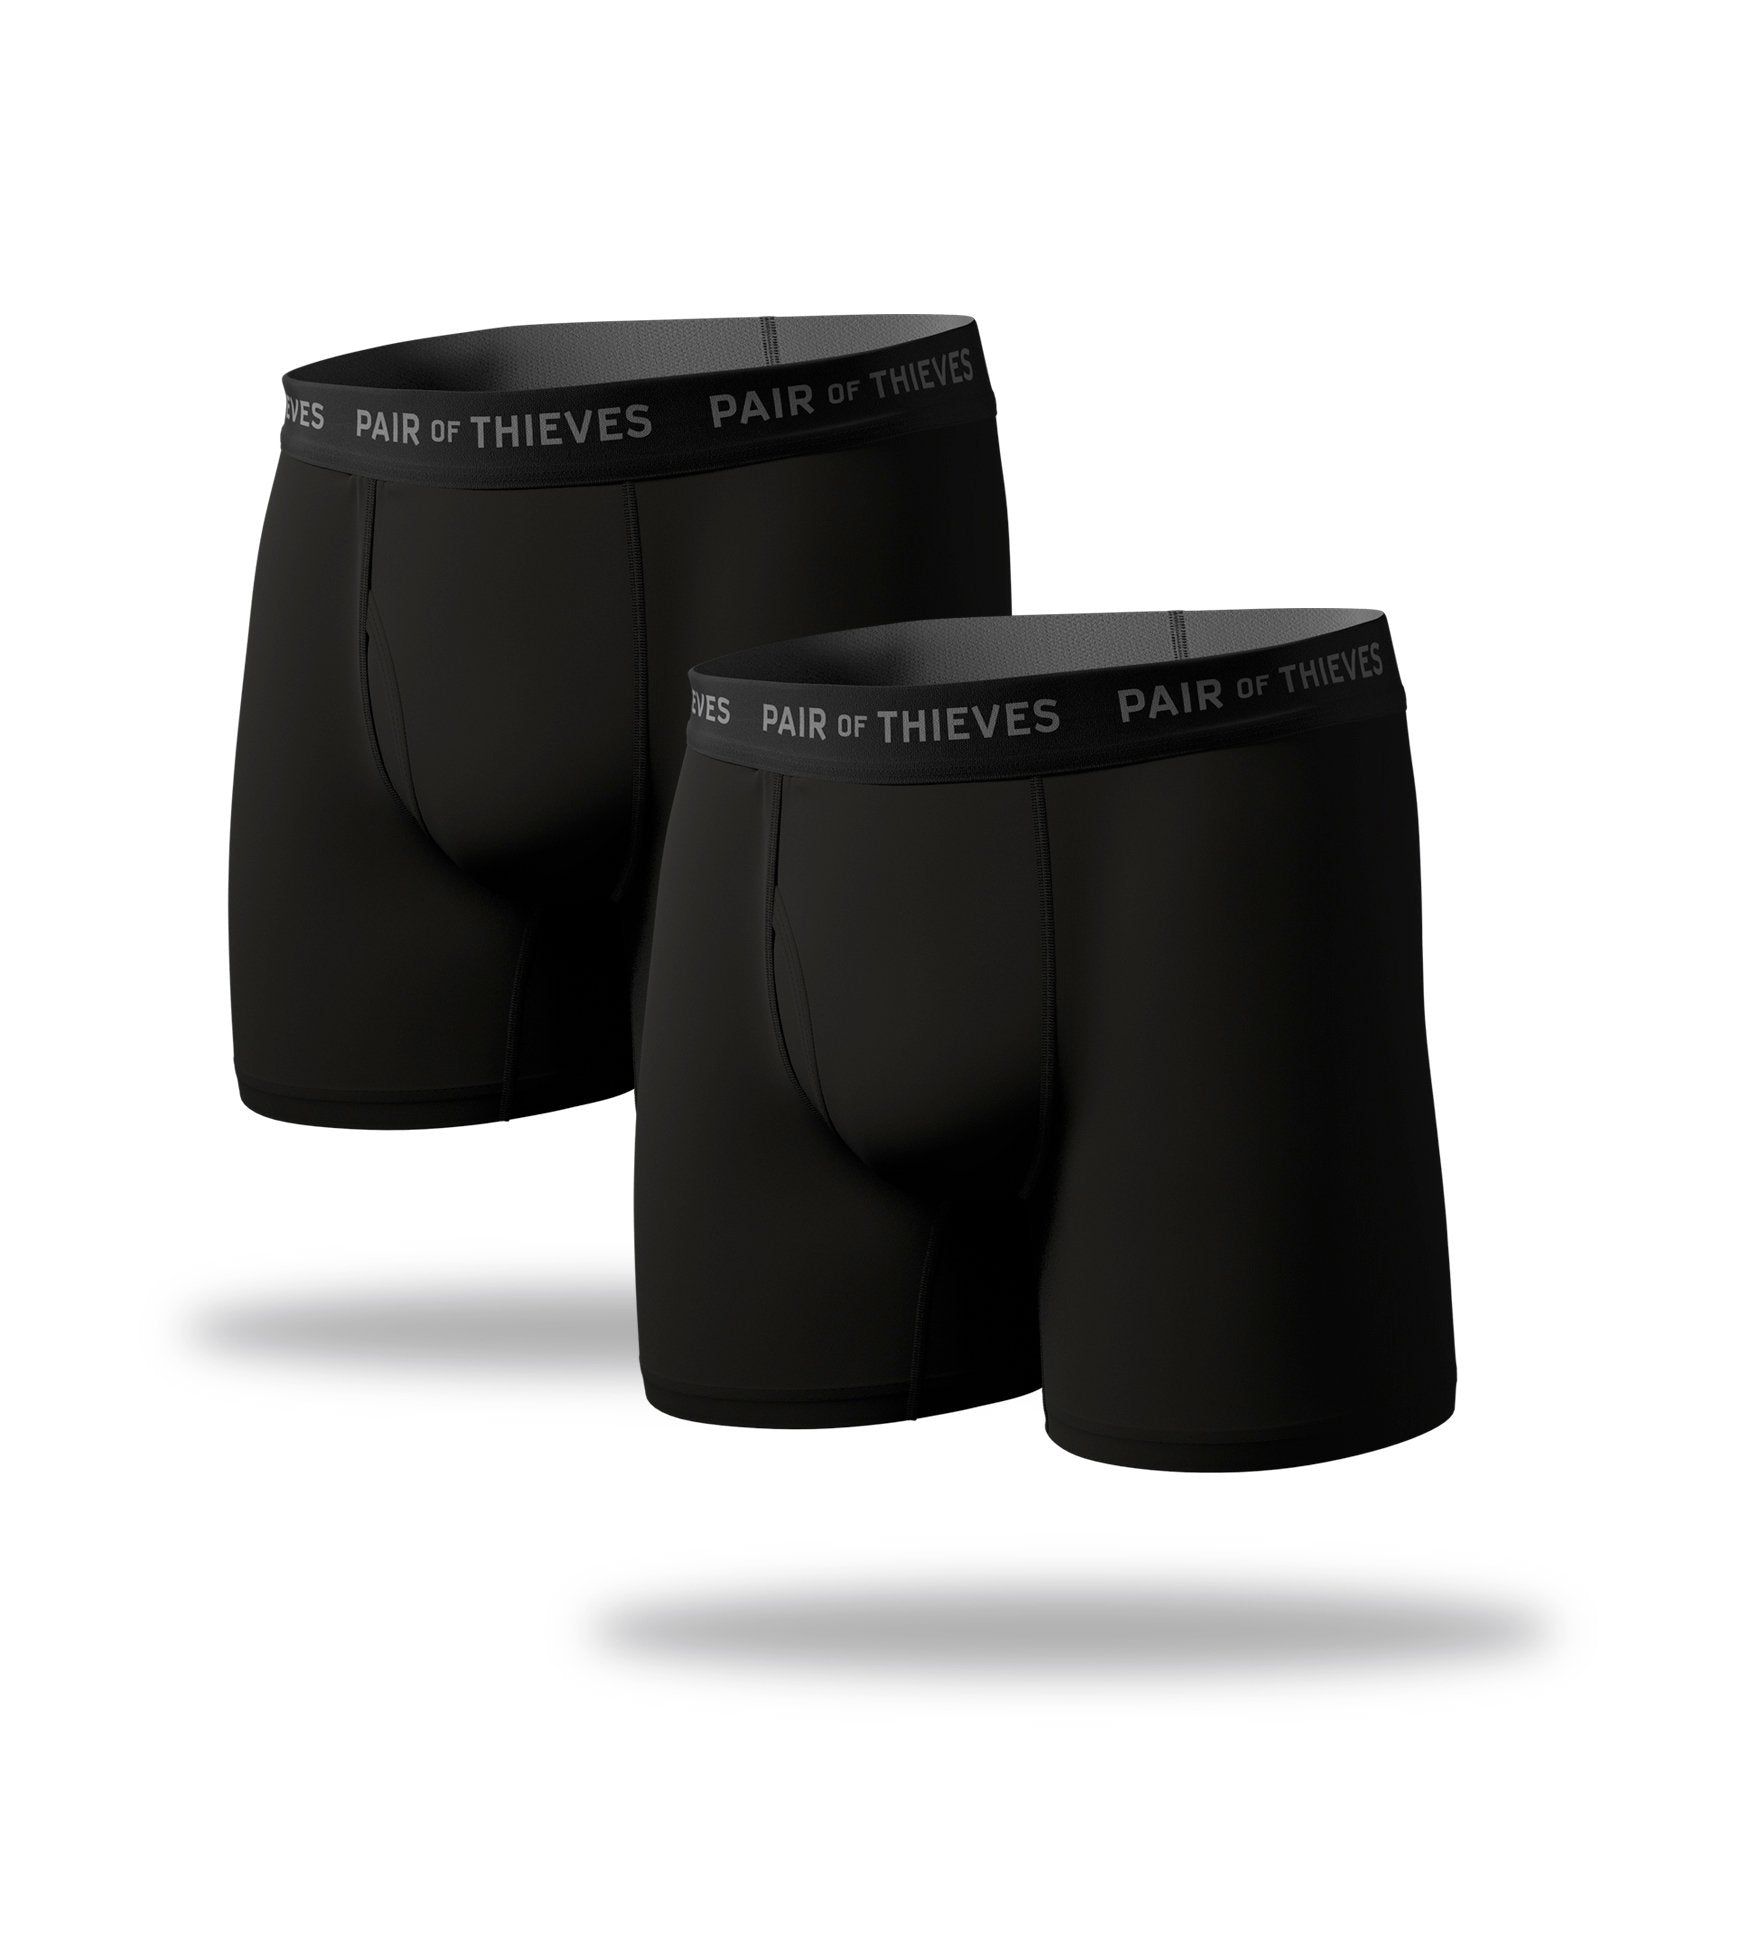 Pair of Thieves Men's 2pk Super Soft Boxer Briefs - Black/White M